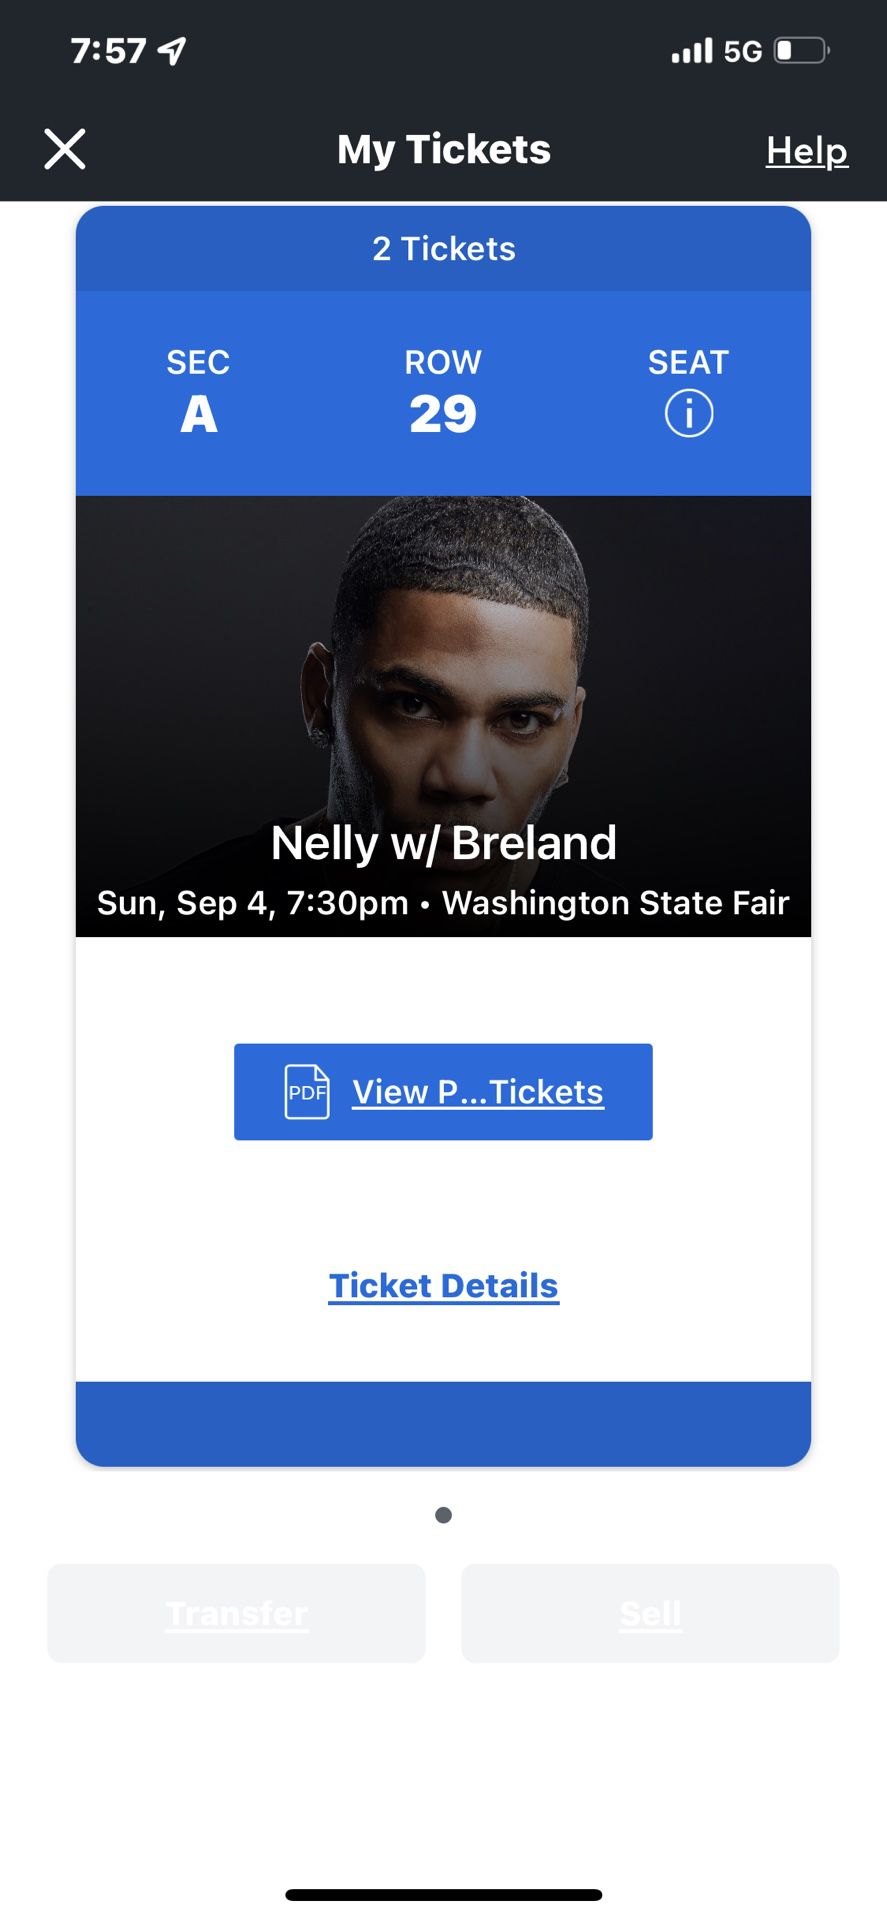 Nelly Washington State Fair